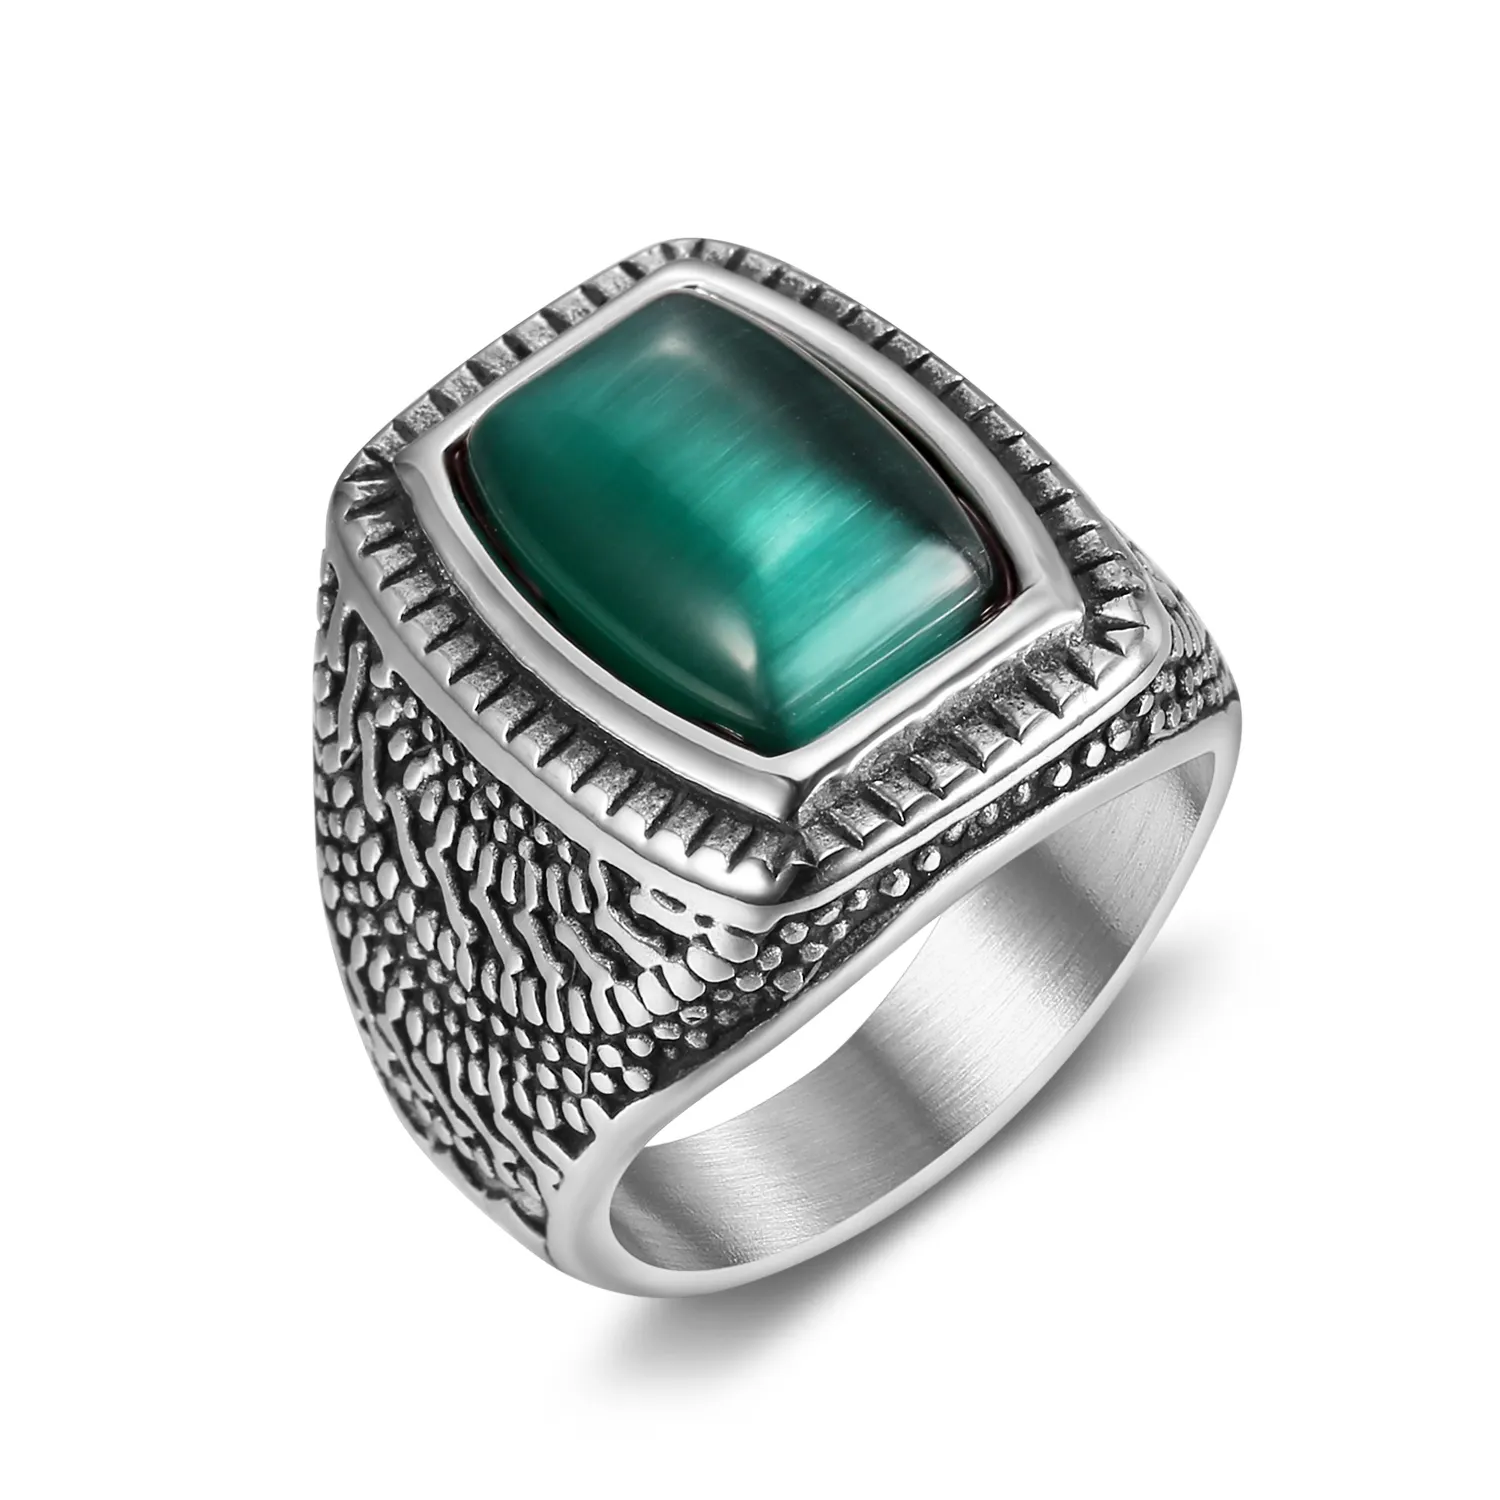 OEM ODM Jewelry Biker Design Stainless Steel Antique Green Stone Rings for Men Male